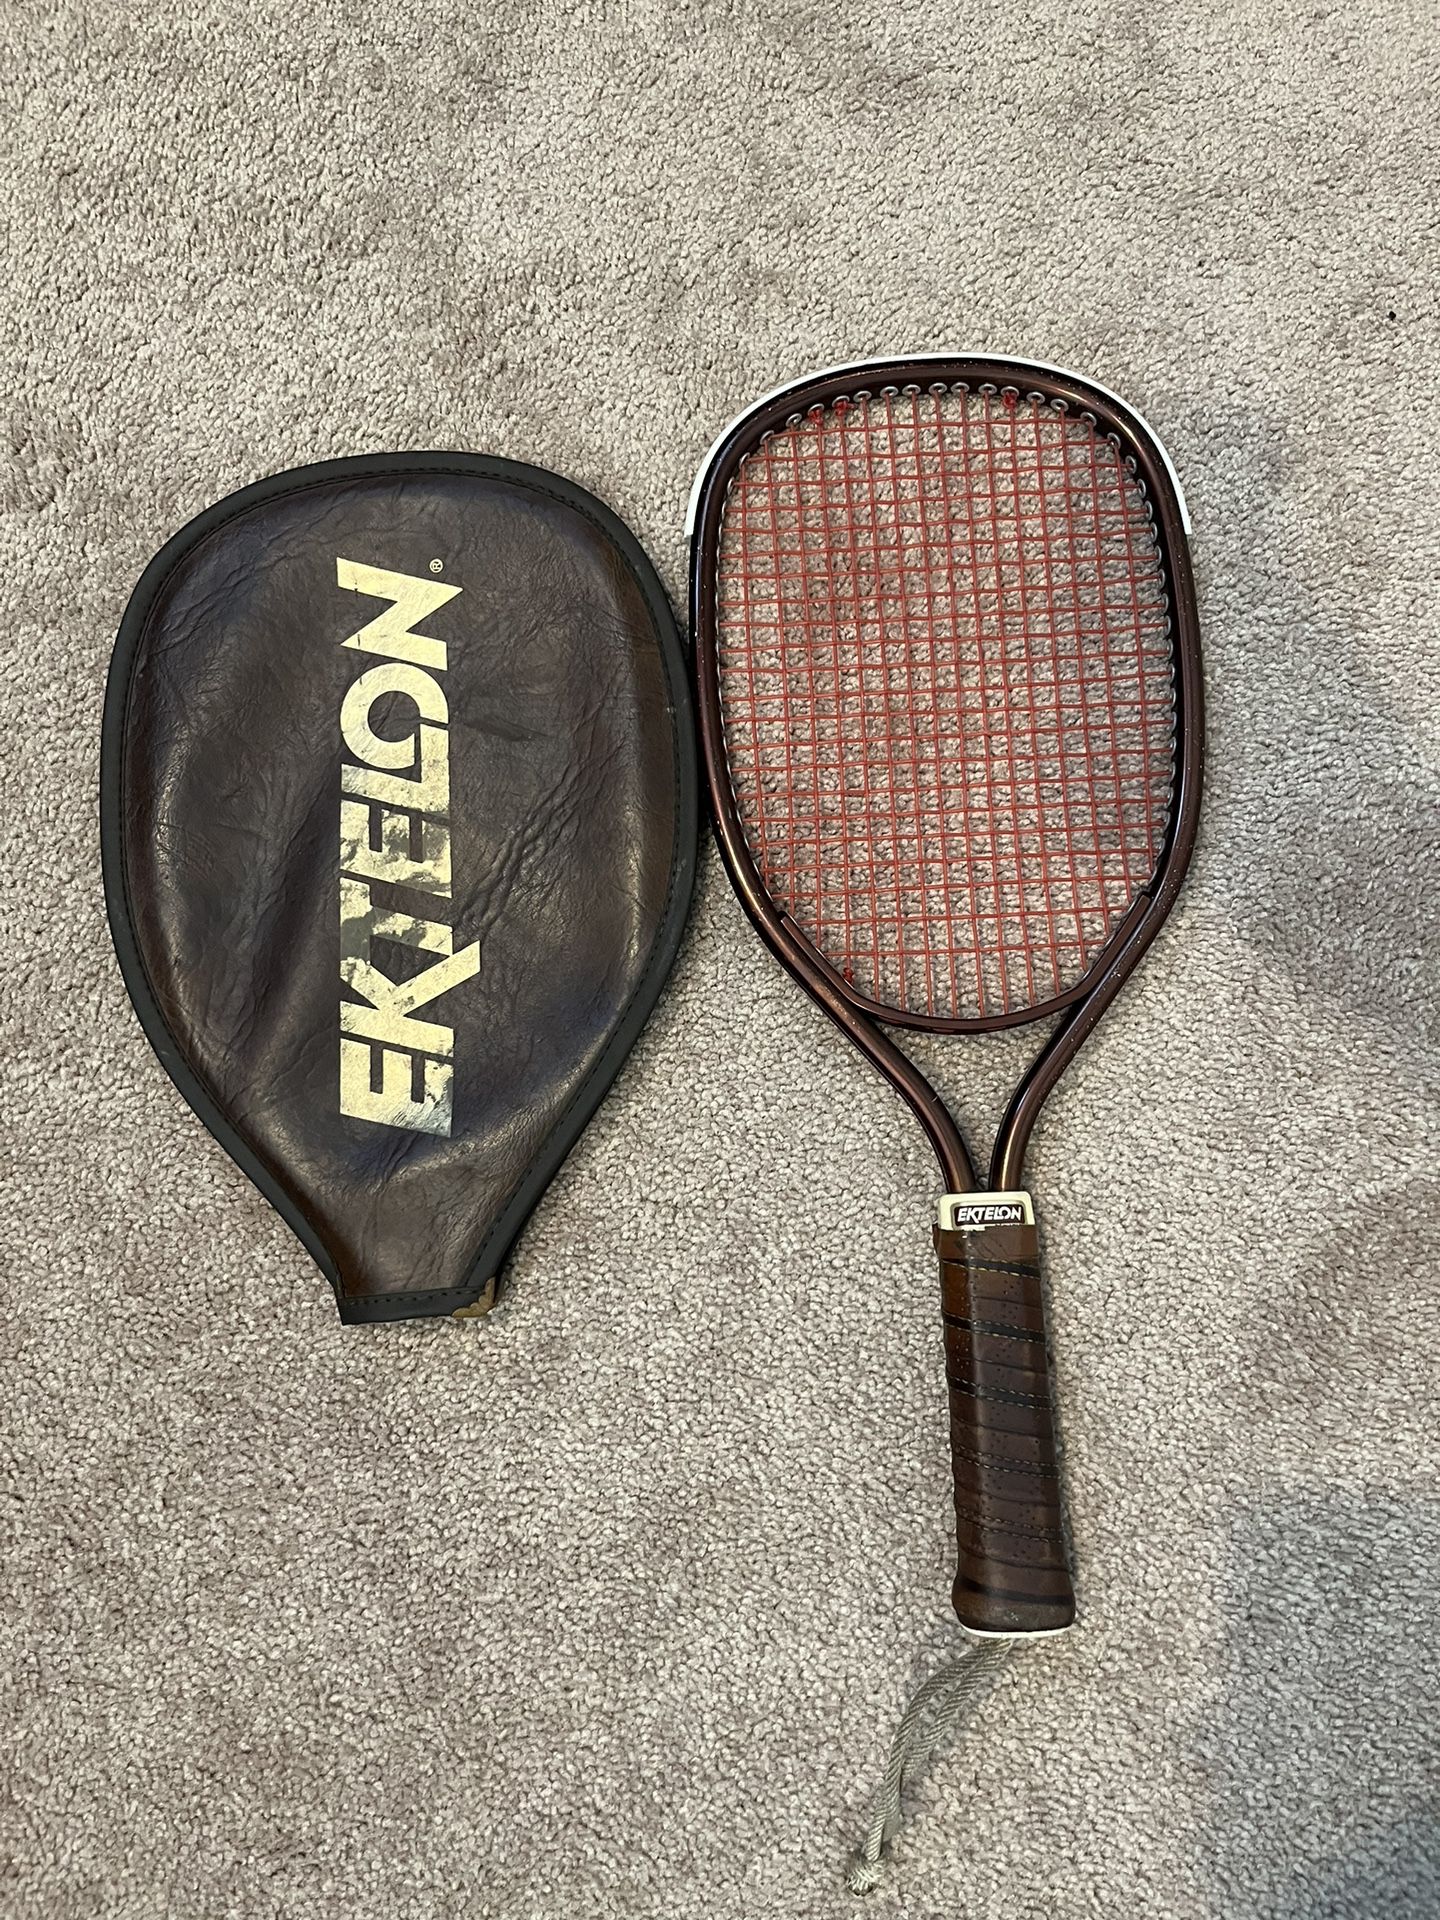 Original Magnum Ektelon Tennis Racket/ Racket Ball